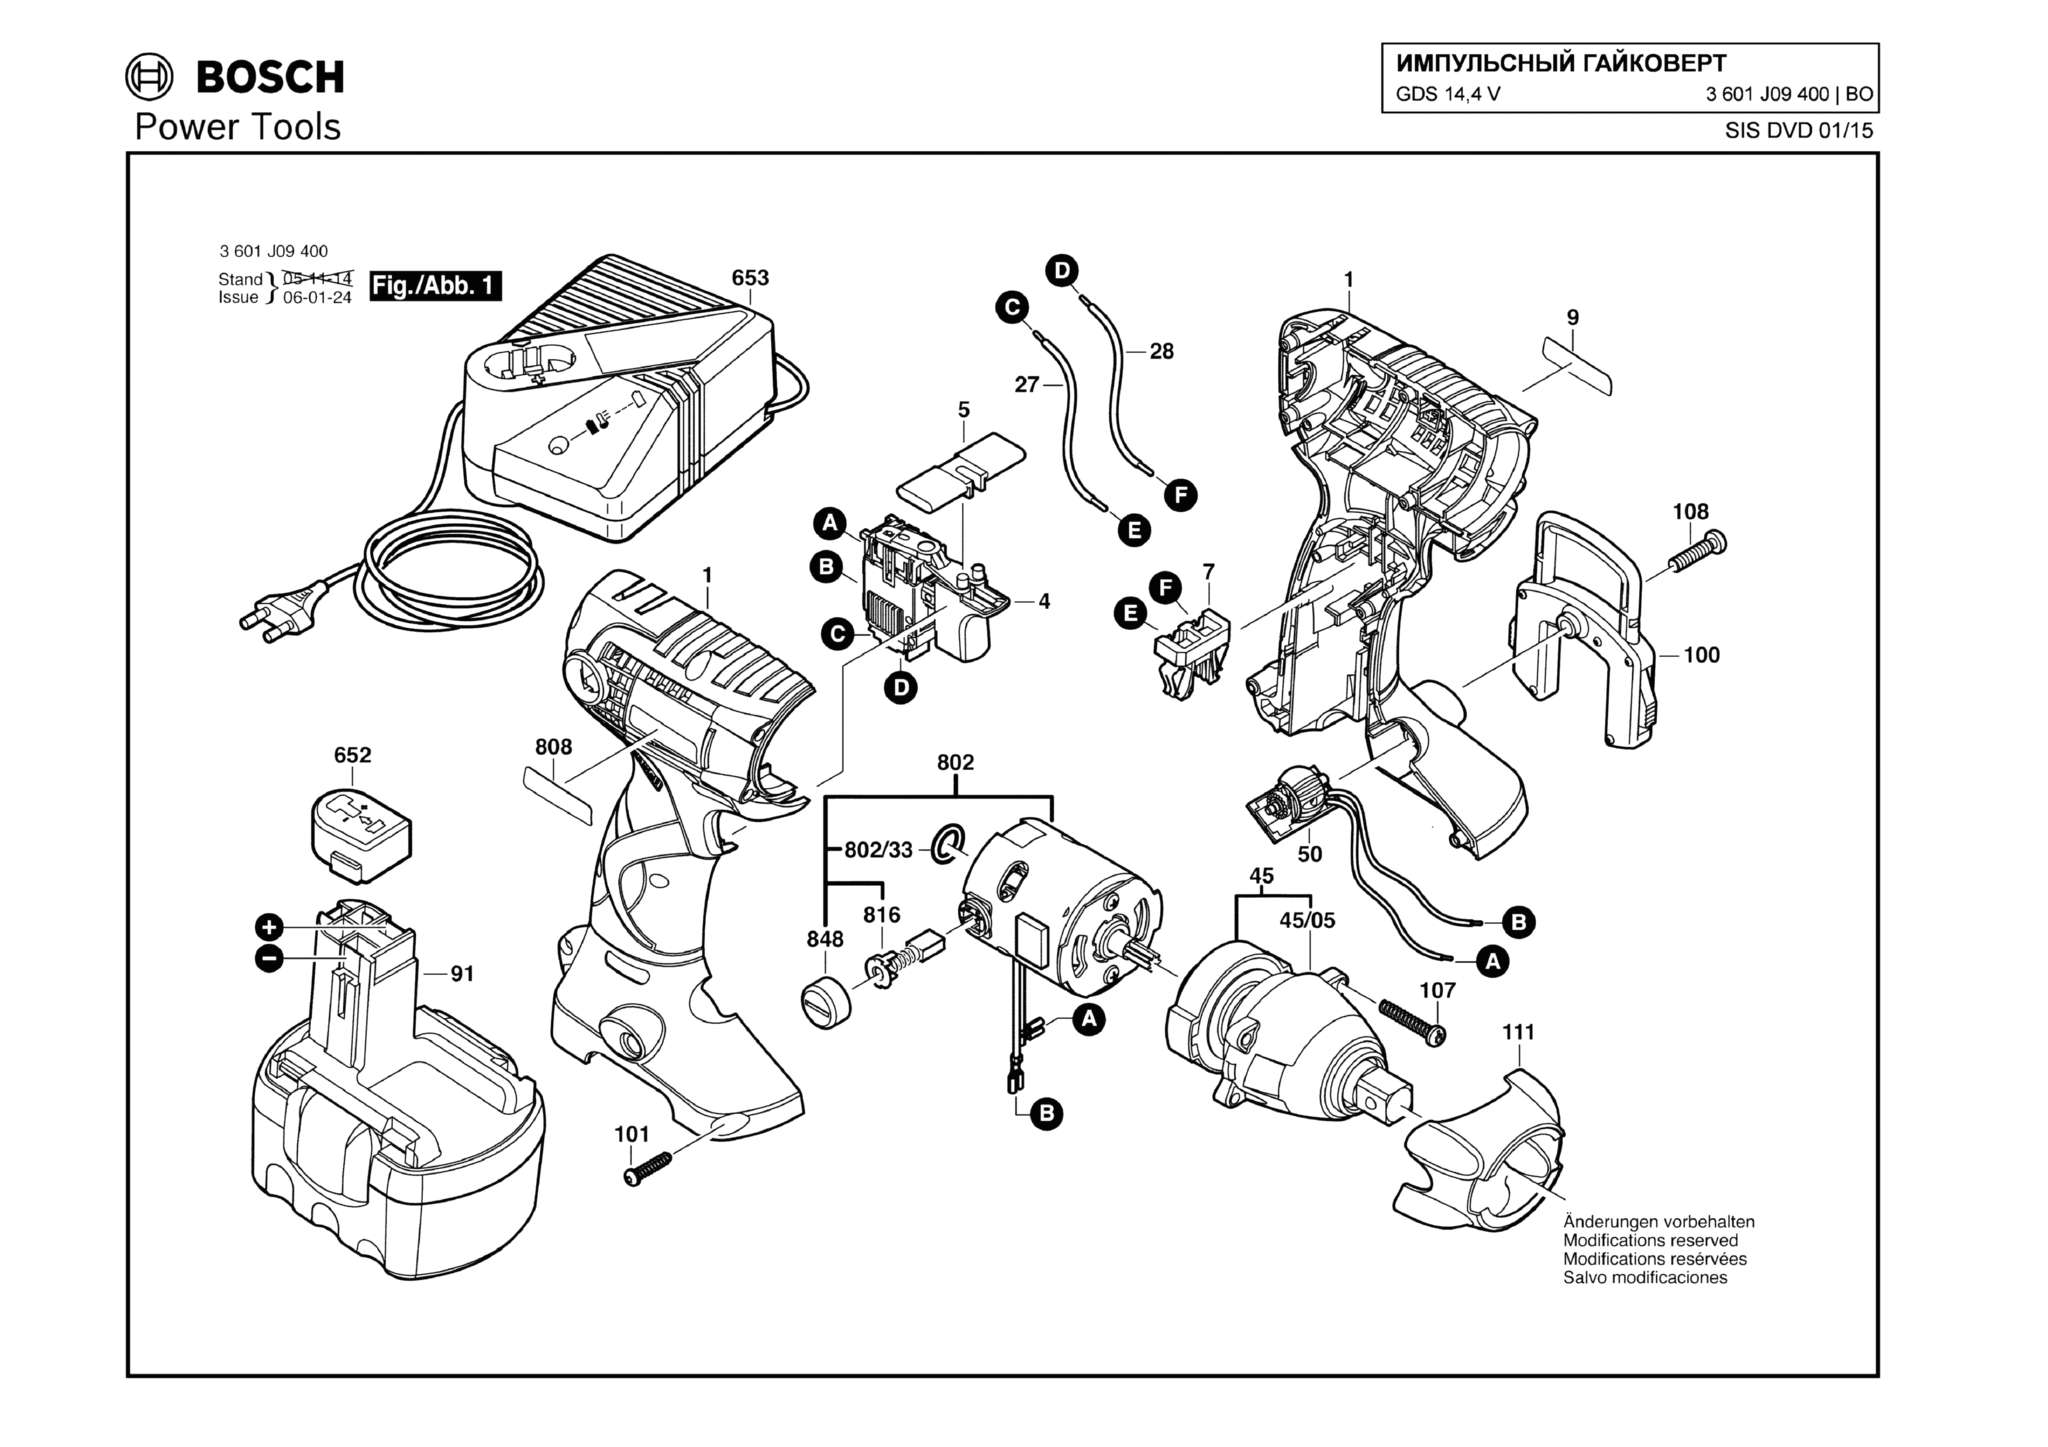 Запчасти, схема и деталировка Bosch GDS 14,4 V (ТИП 3601J09400)